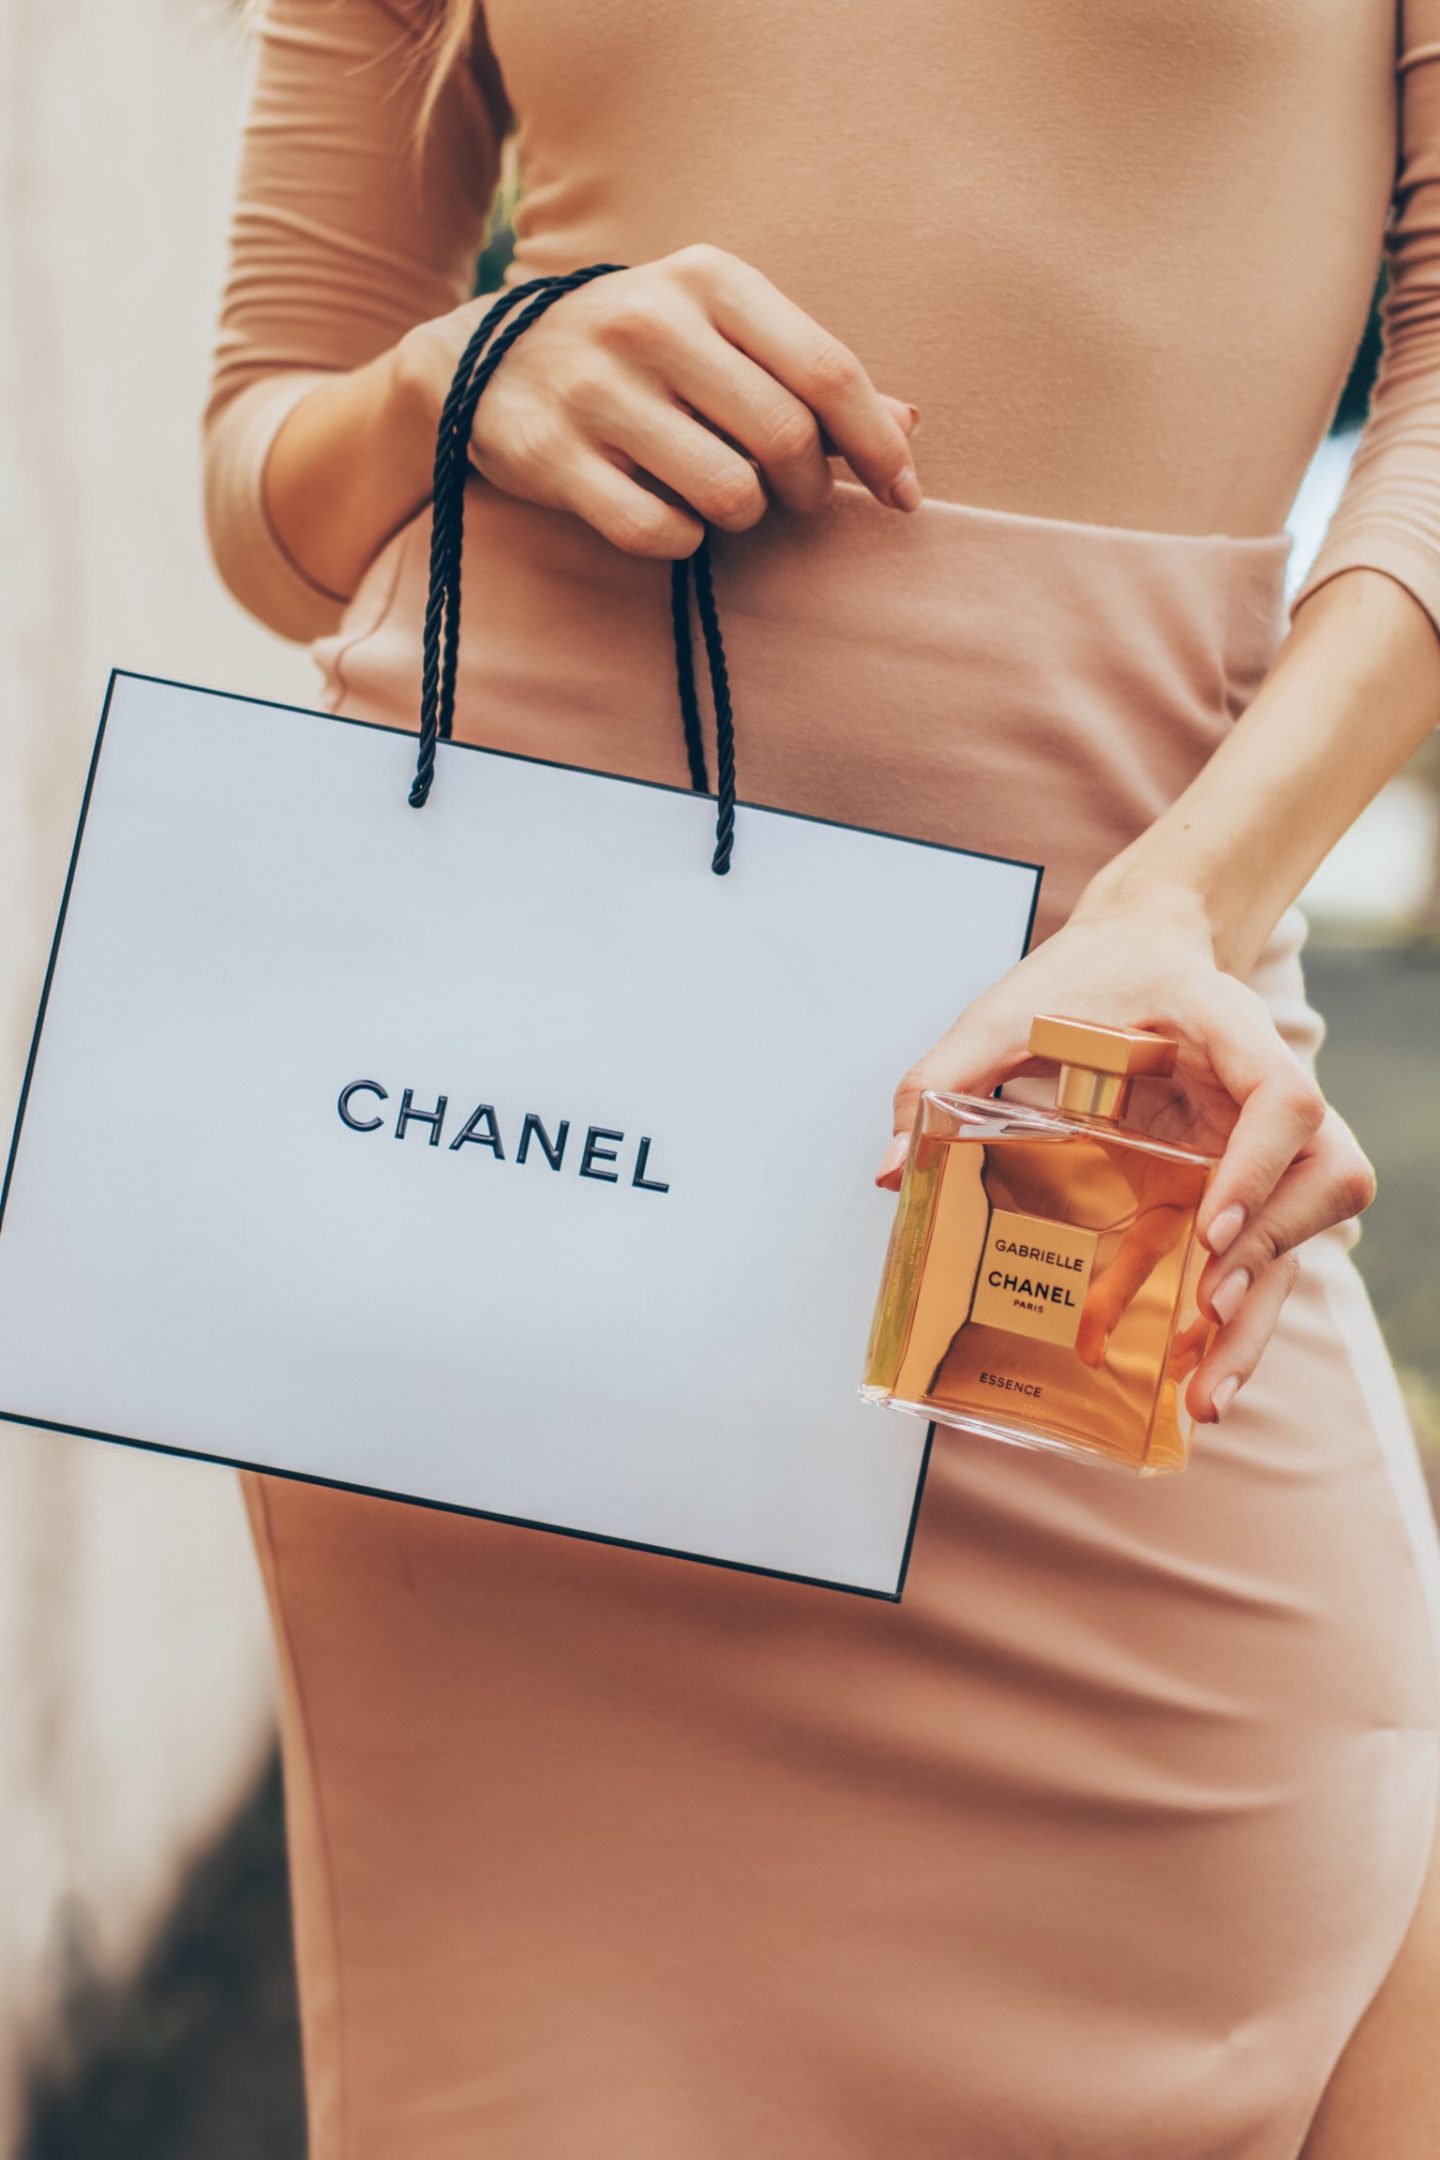 Gabrielle: Chanel Paris’ New Fragrance – Essence